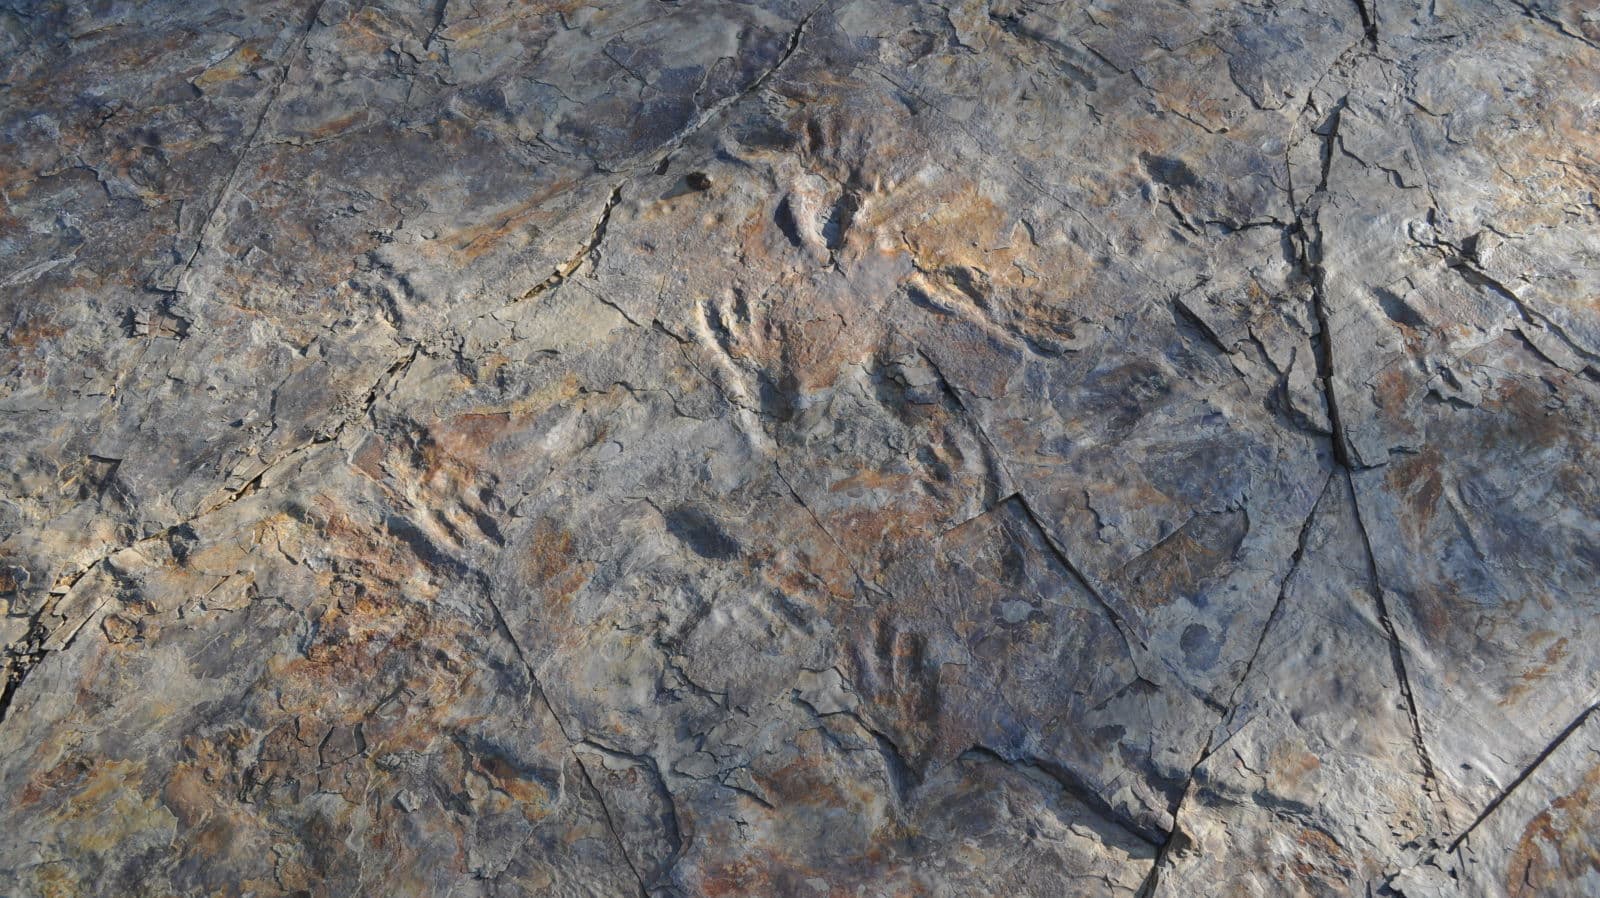 Pegadas deixadas pelo Batrachopus grandis, o crocodilo bípede